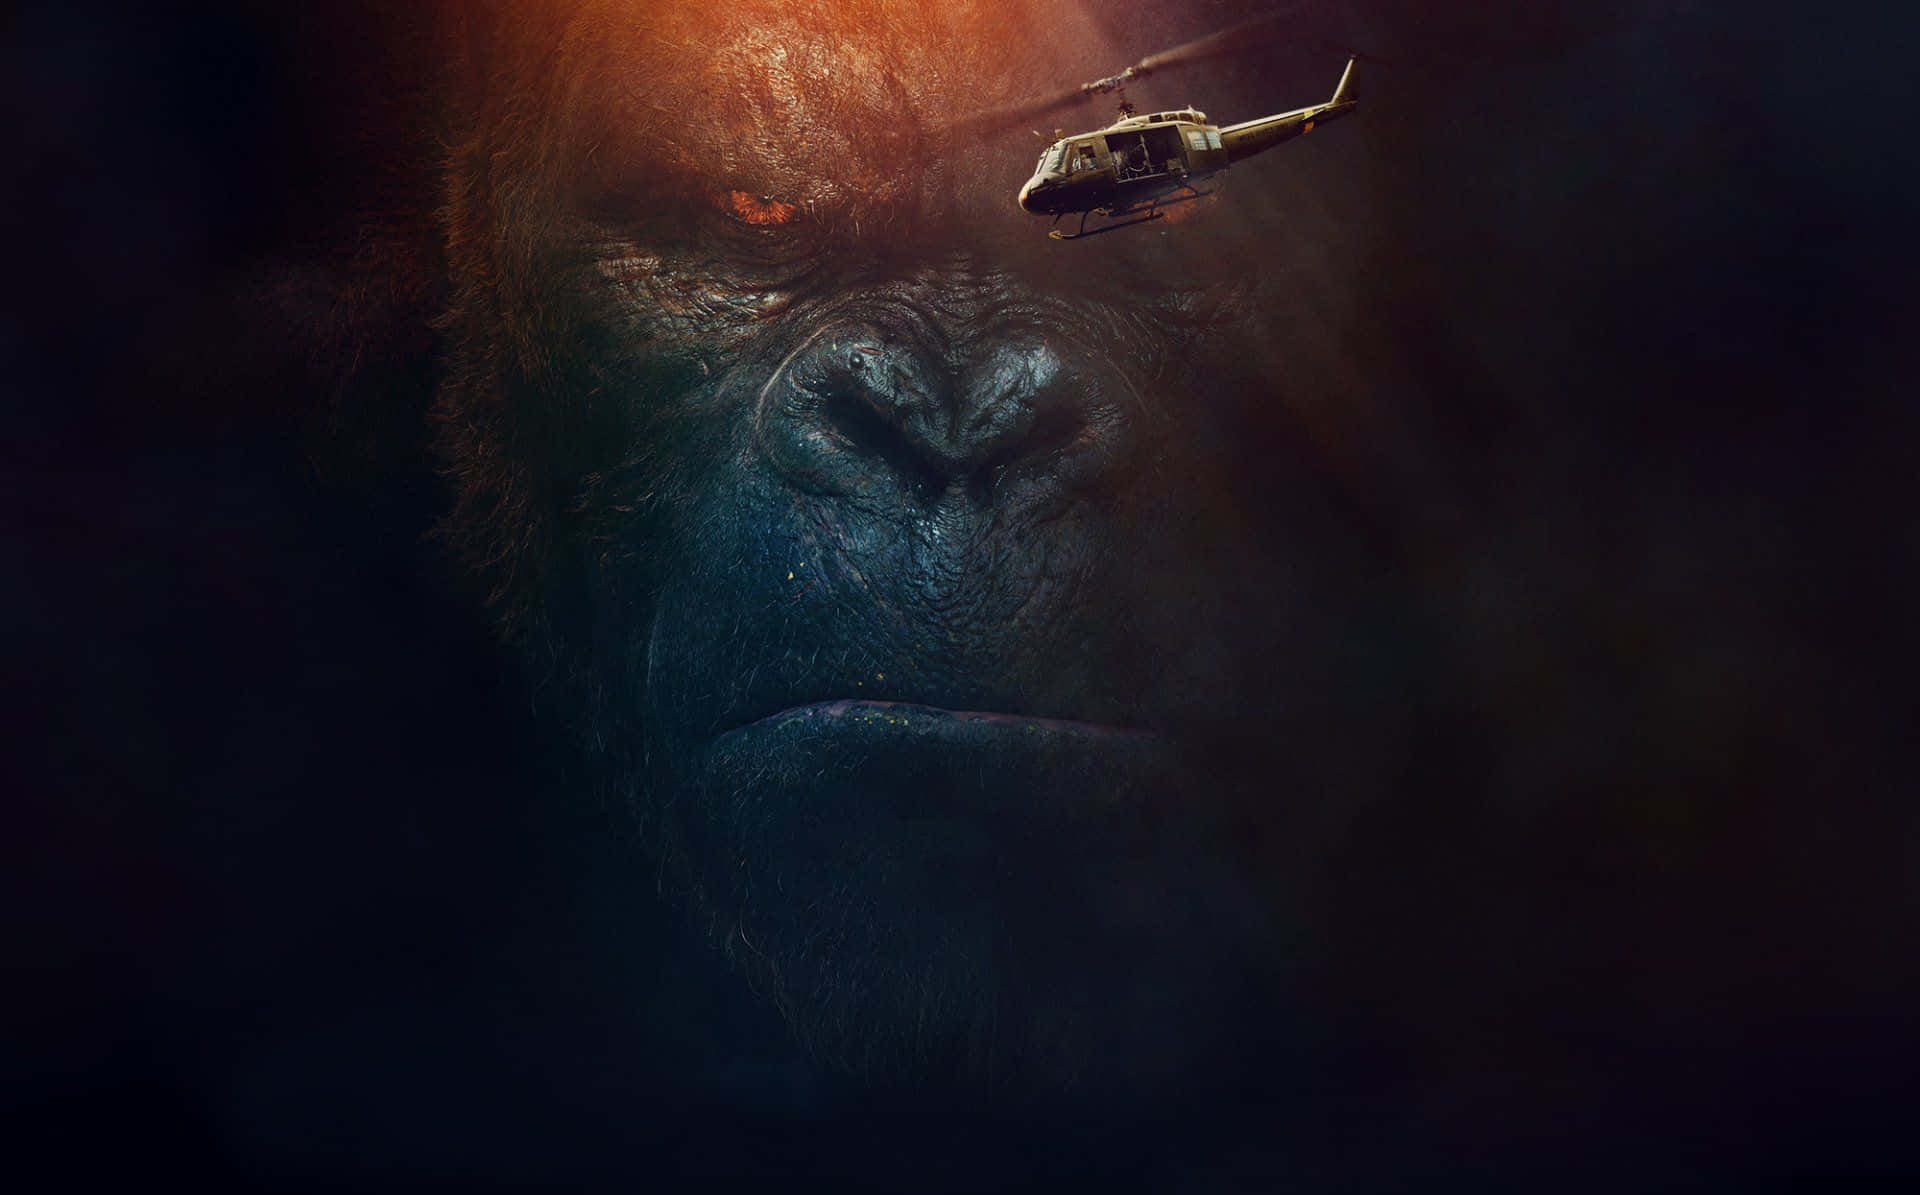 Einposter Für Den Film King Kong Wallpaper